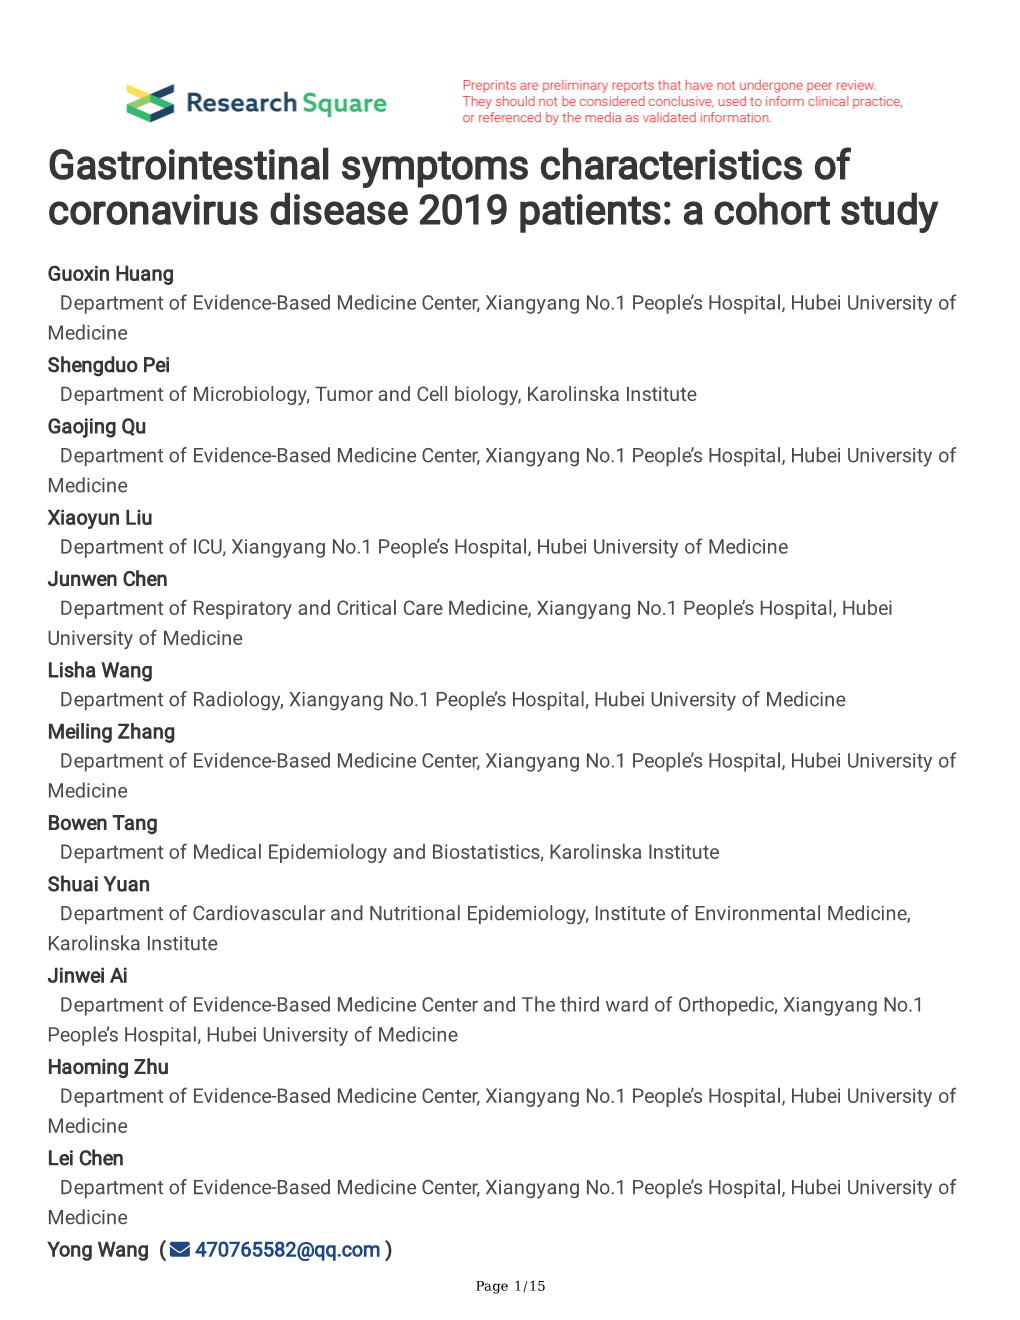 Gastrointestinal Symptoms Characteristics of Coronavirus Disease 2019 Patients: a Cohort Study